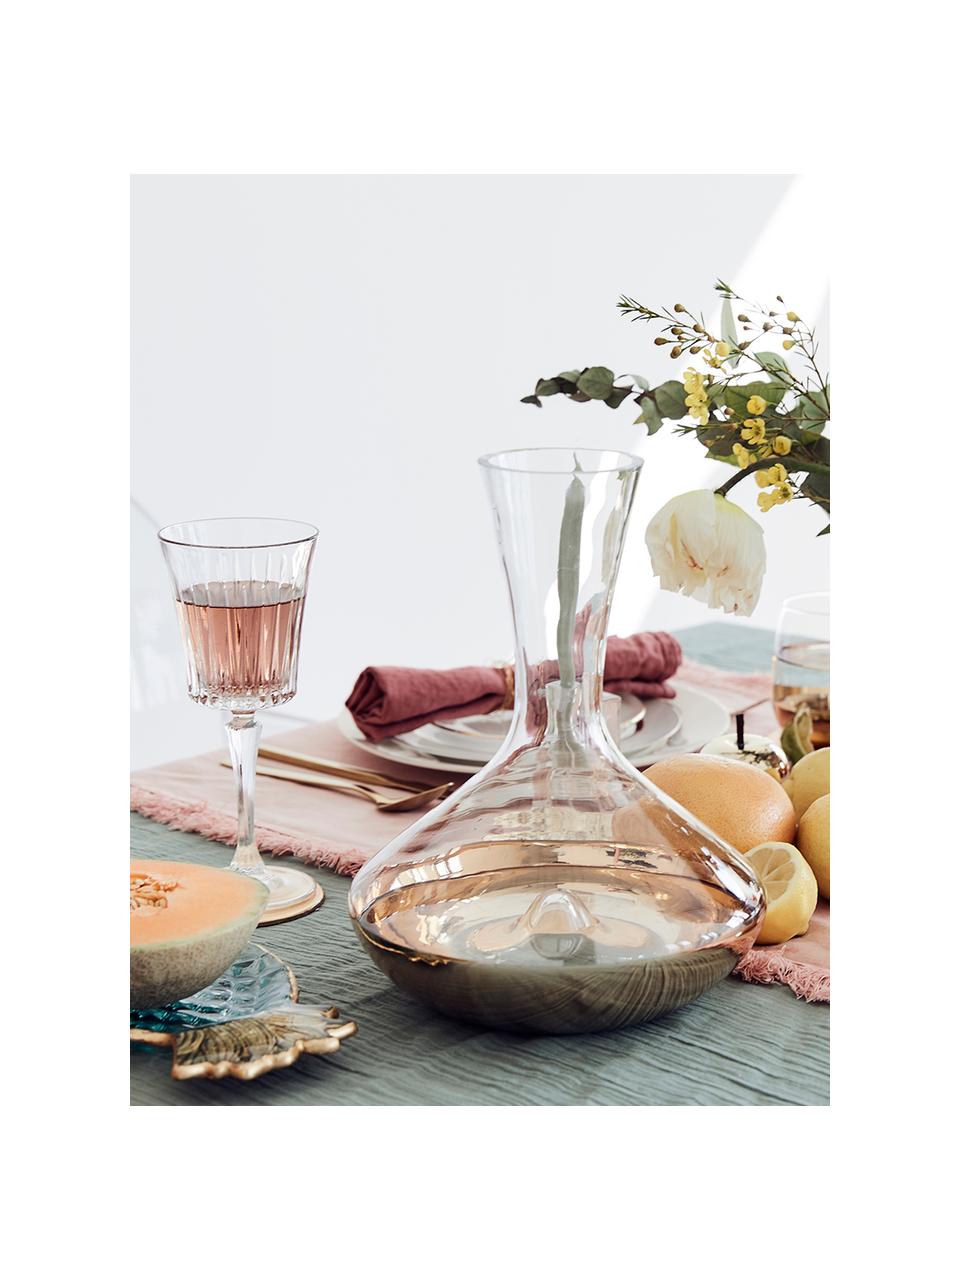 Kristall-Weissweingläser Timeless mit Rillenrelief, 6 Stück, Luxion-Kristallglas, Transparent, Ø 8 x H 20 cm, 230 ml